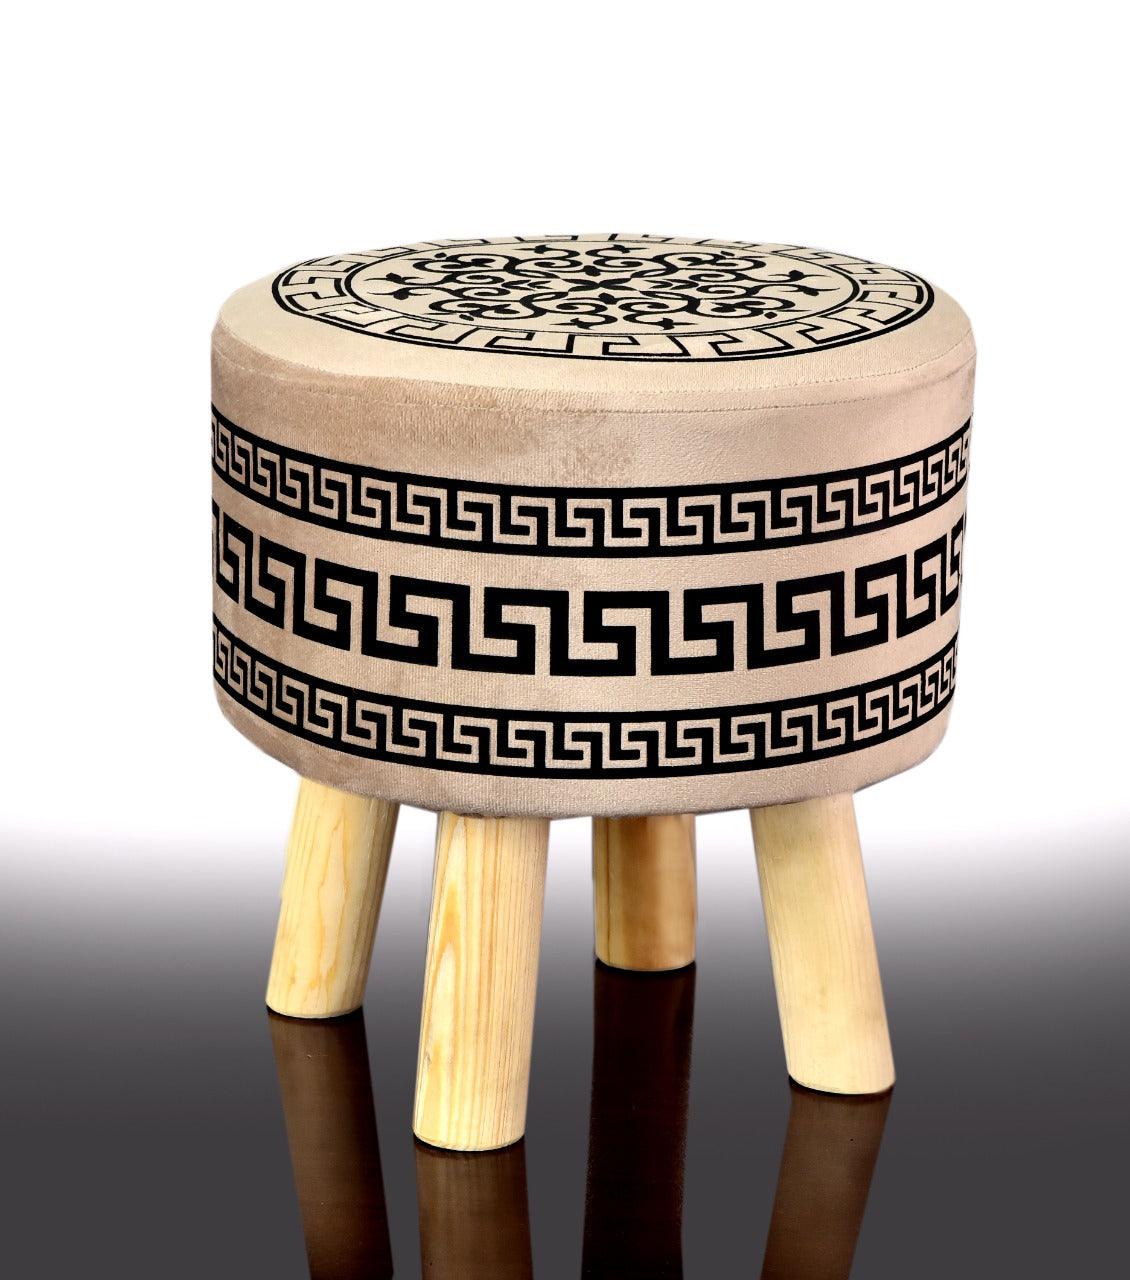 Wooden stool Vercase Design round shape-733 - 92Bedding